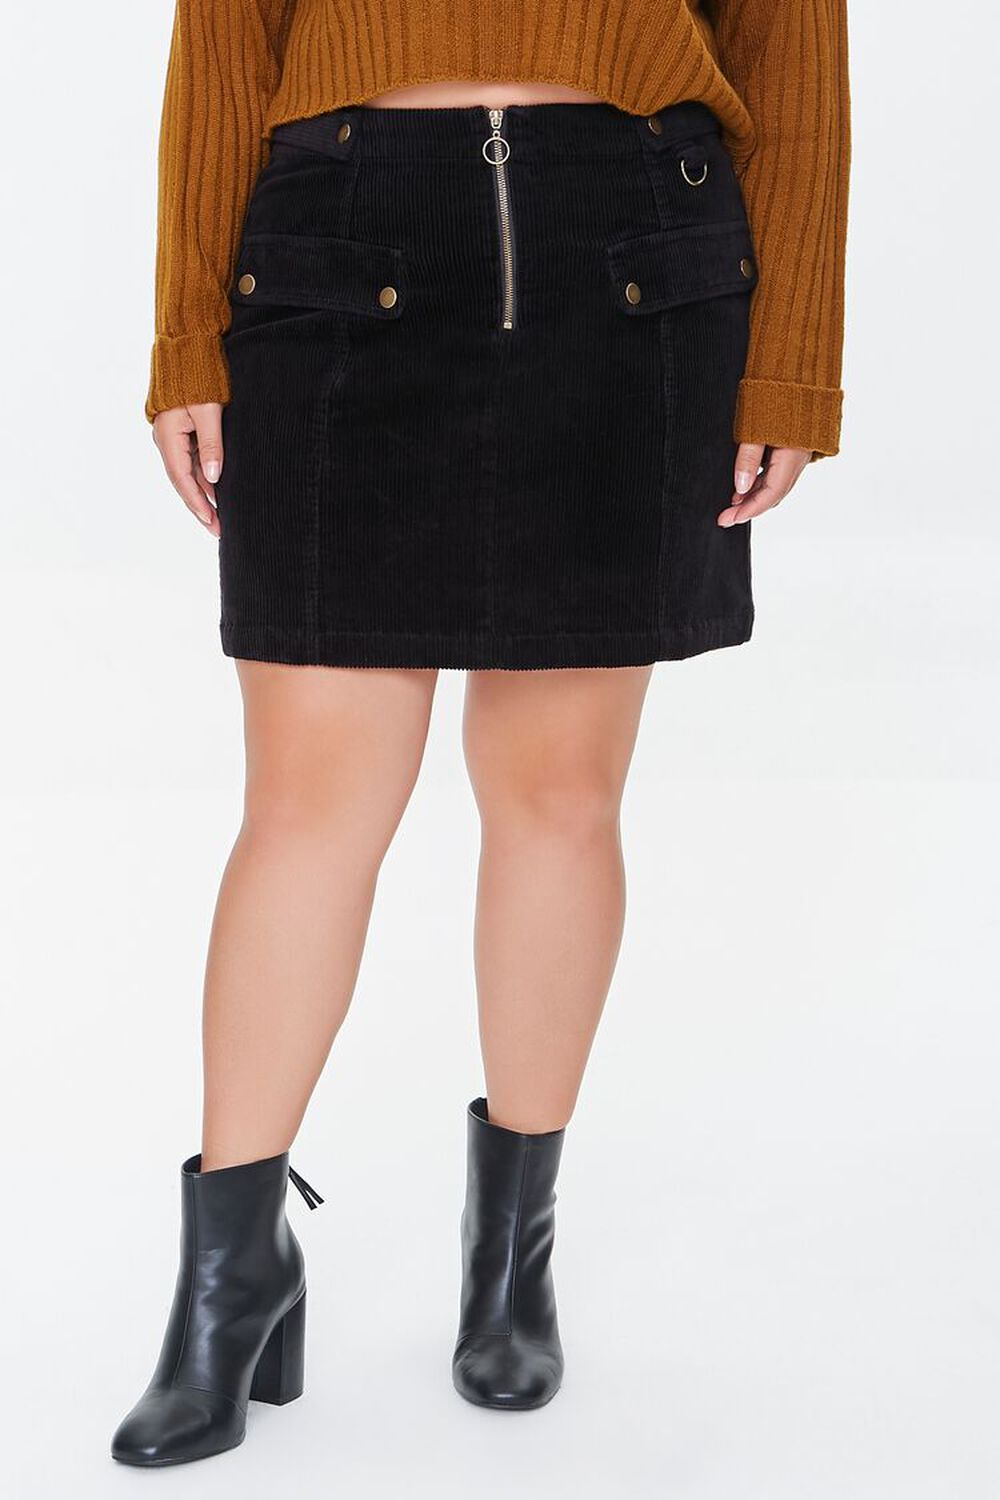 BLACK Plus Size Corduroy Mini Skirt, image 2